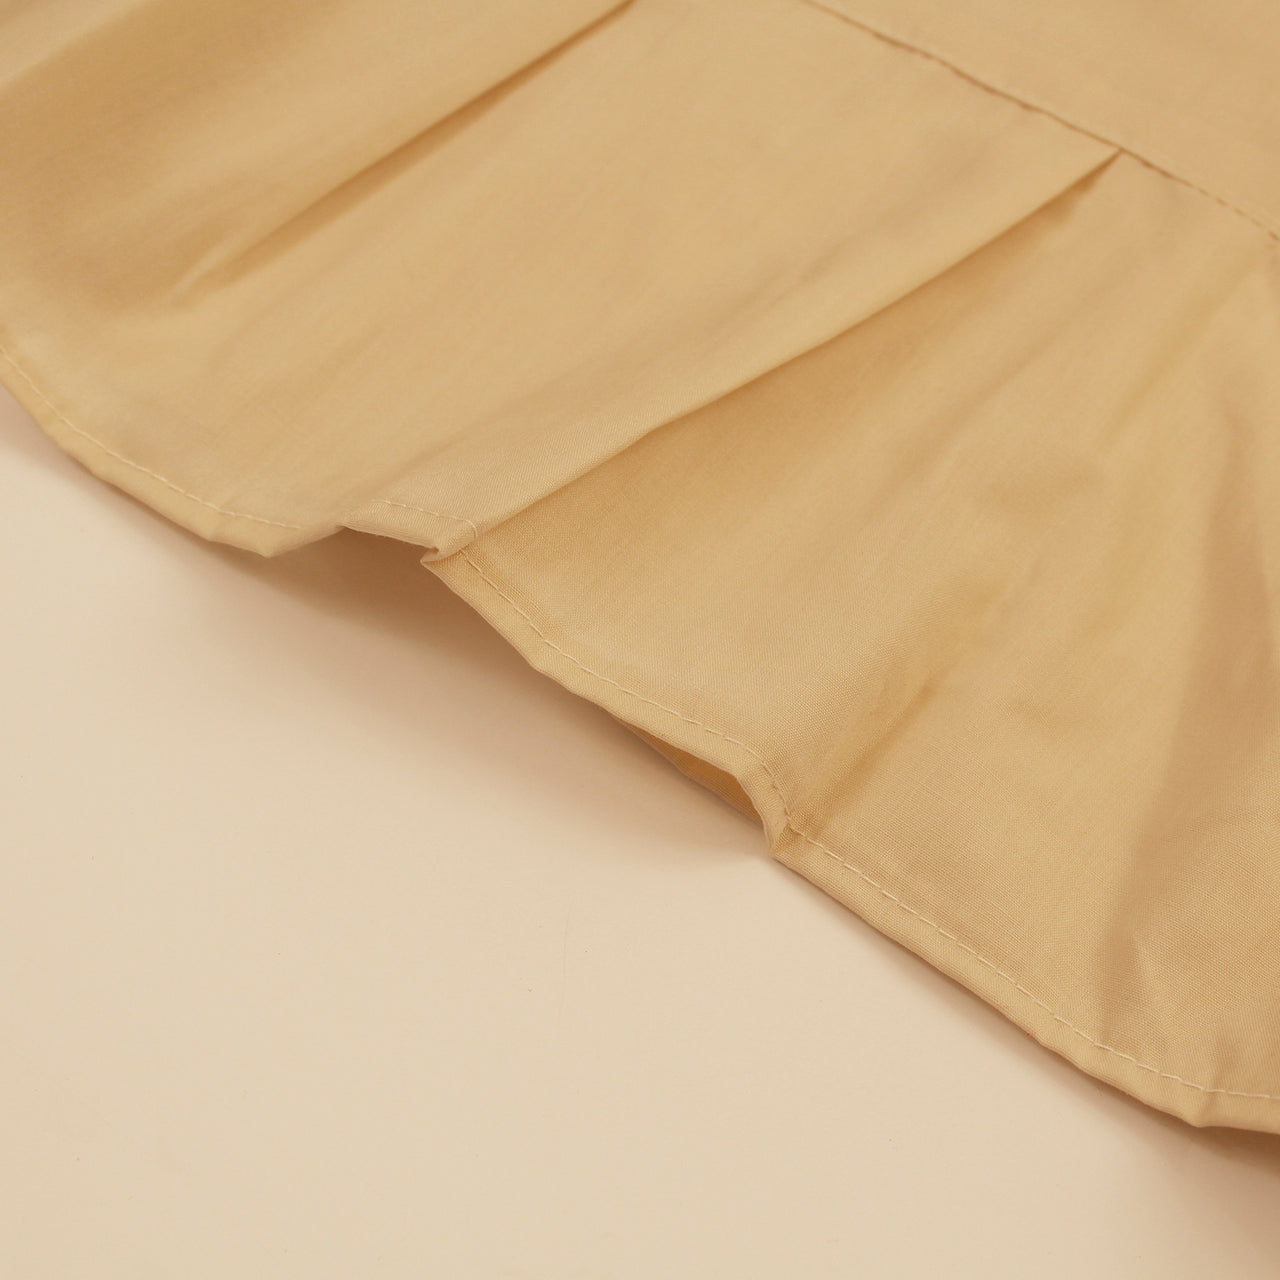 Beige - Sari (Saree) Petticoat - Available in S, M, L & XL - Underskirts For Sari's